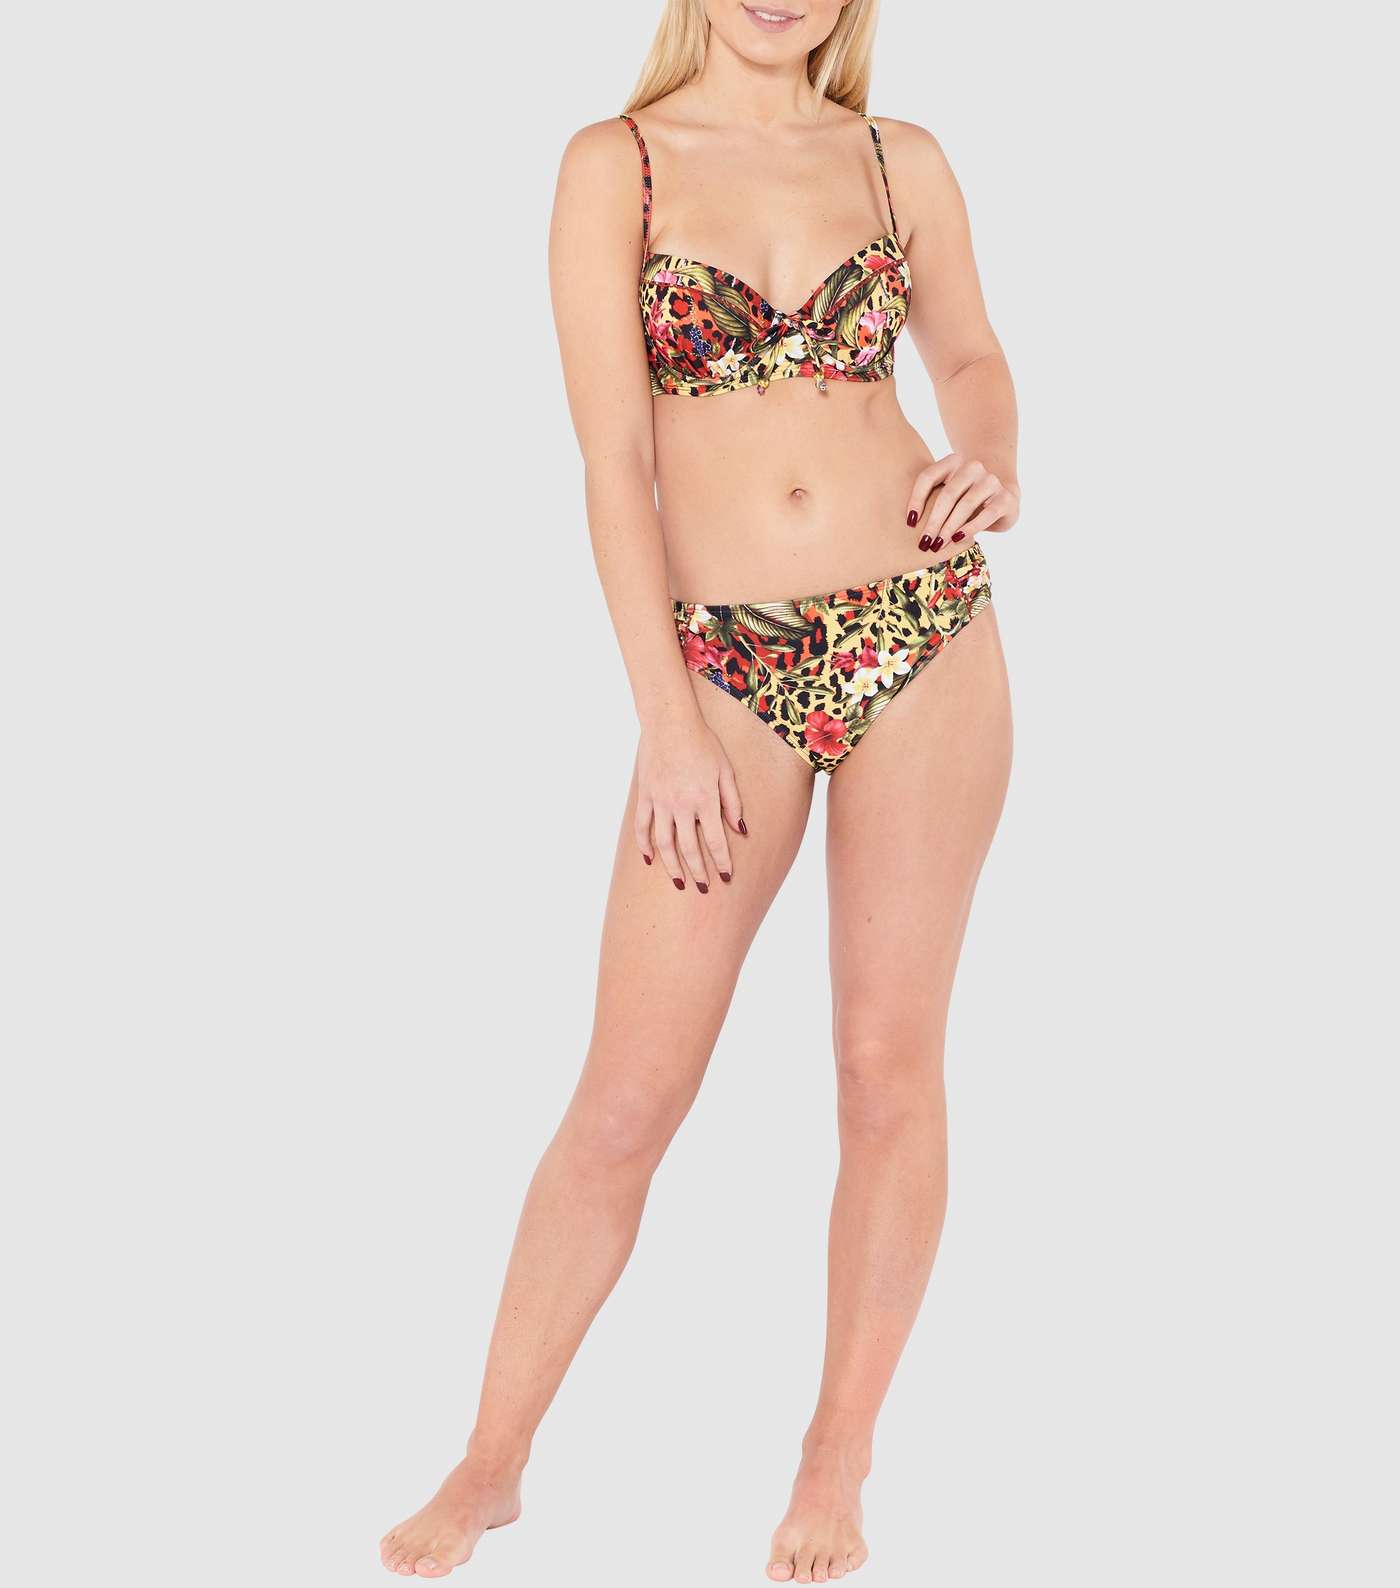 Beachcomber Multicoloured Tie Front Underwired Bikini Top Image 2